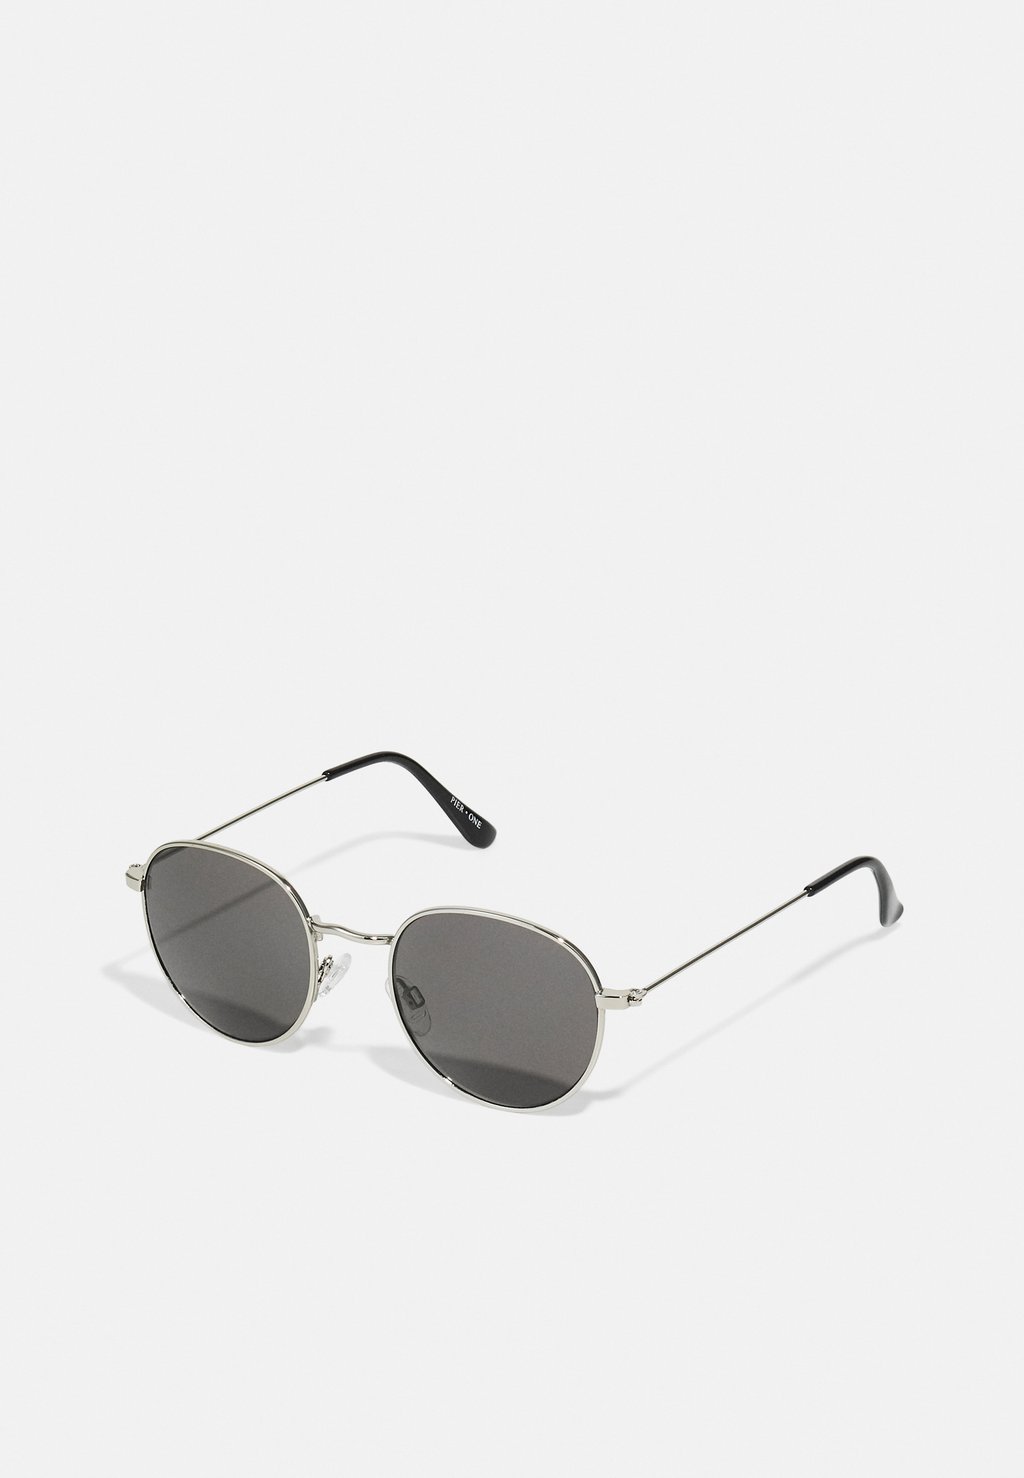 Солнцезащитные очки Unisex Pier One, цвет black/silver-coloured солнцезащитные очки unisex gucci цвет black silver coloured